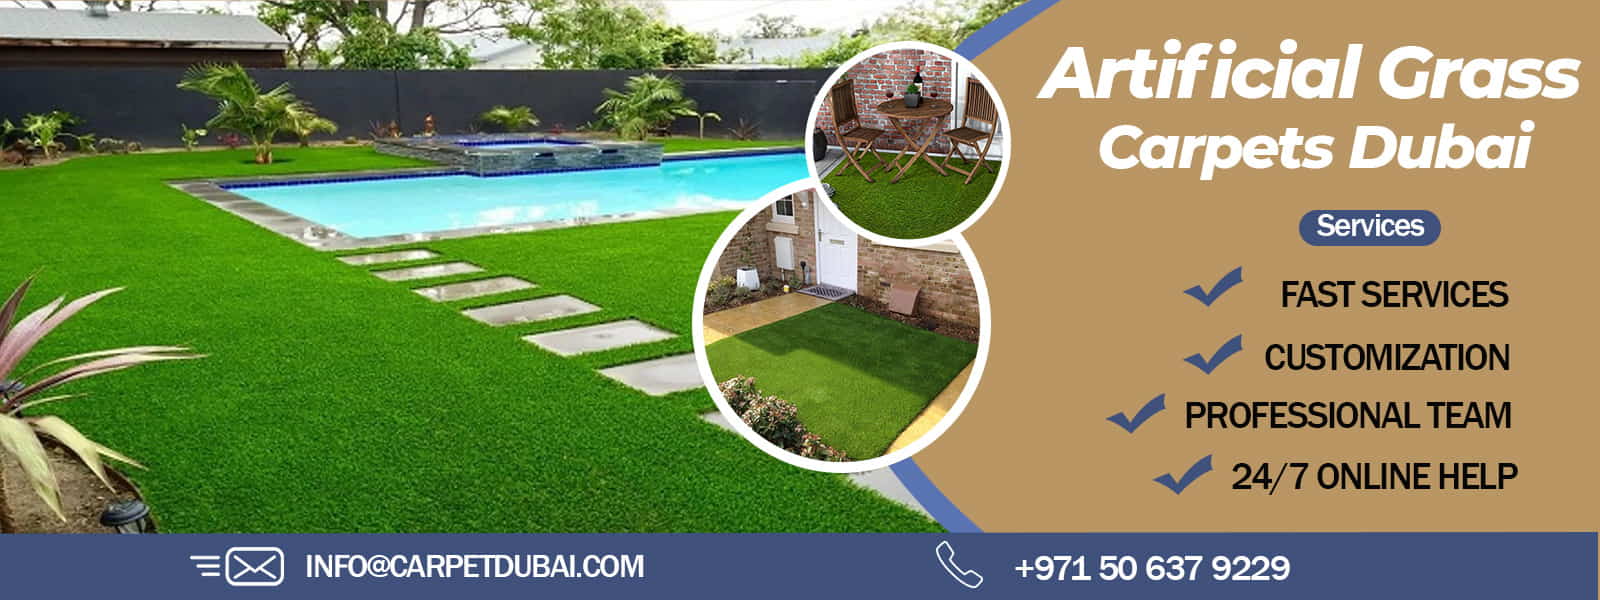 Artificial-Grass-Carpets-Dubai banner